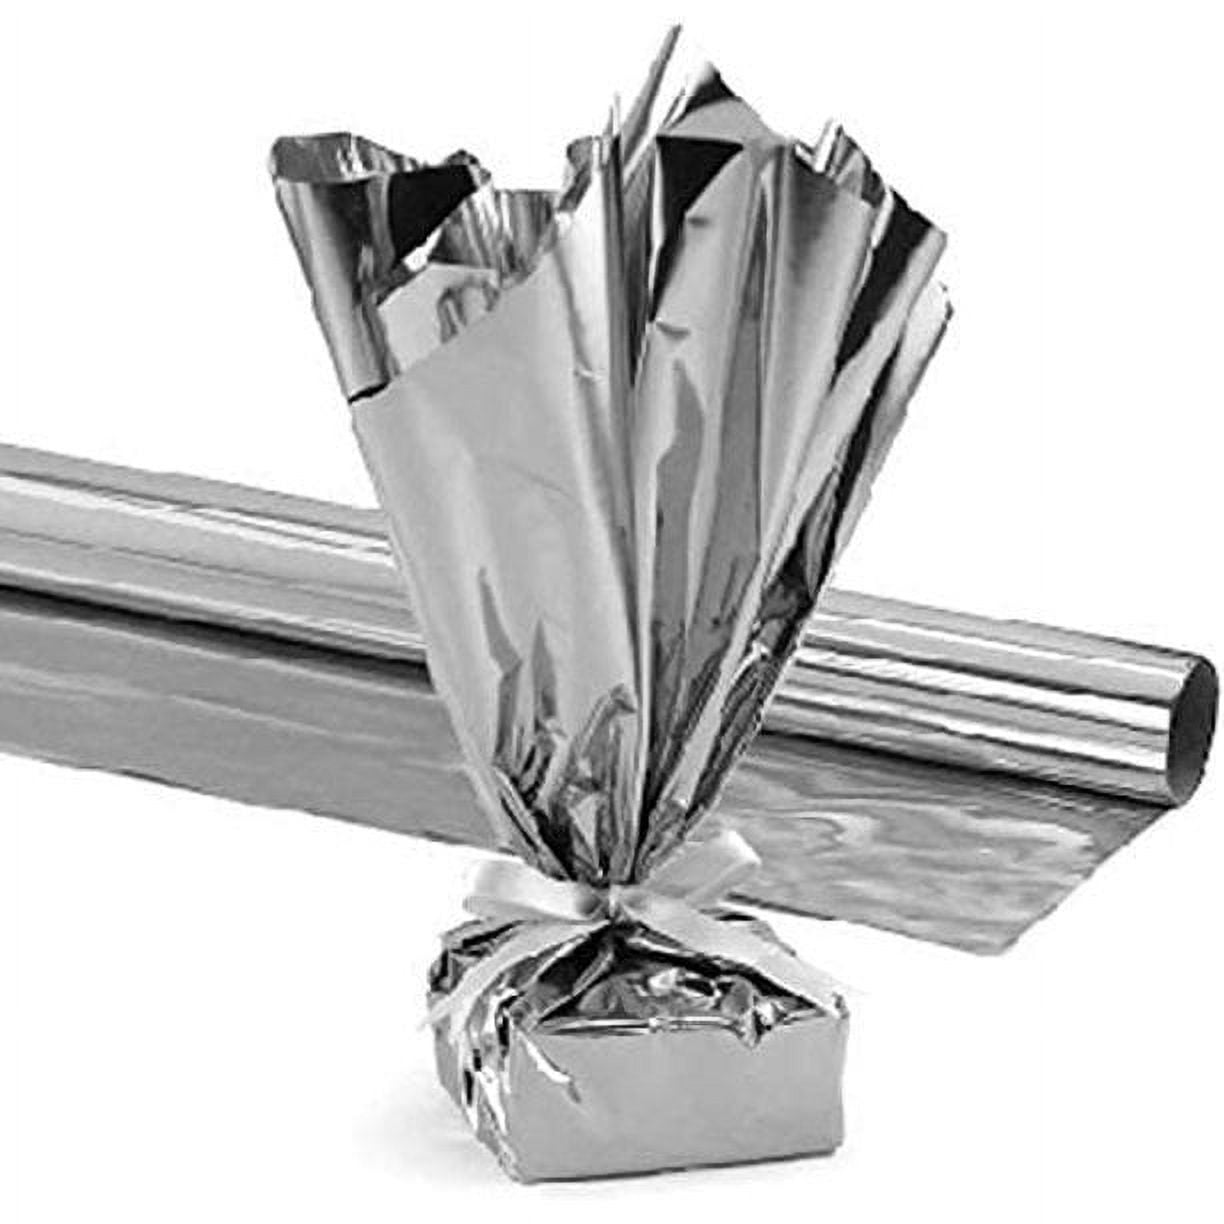 Silver Metallic Foil Fusing Rolls - Best Quality, Best Price per Inch